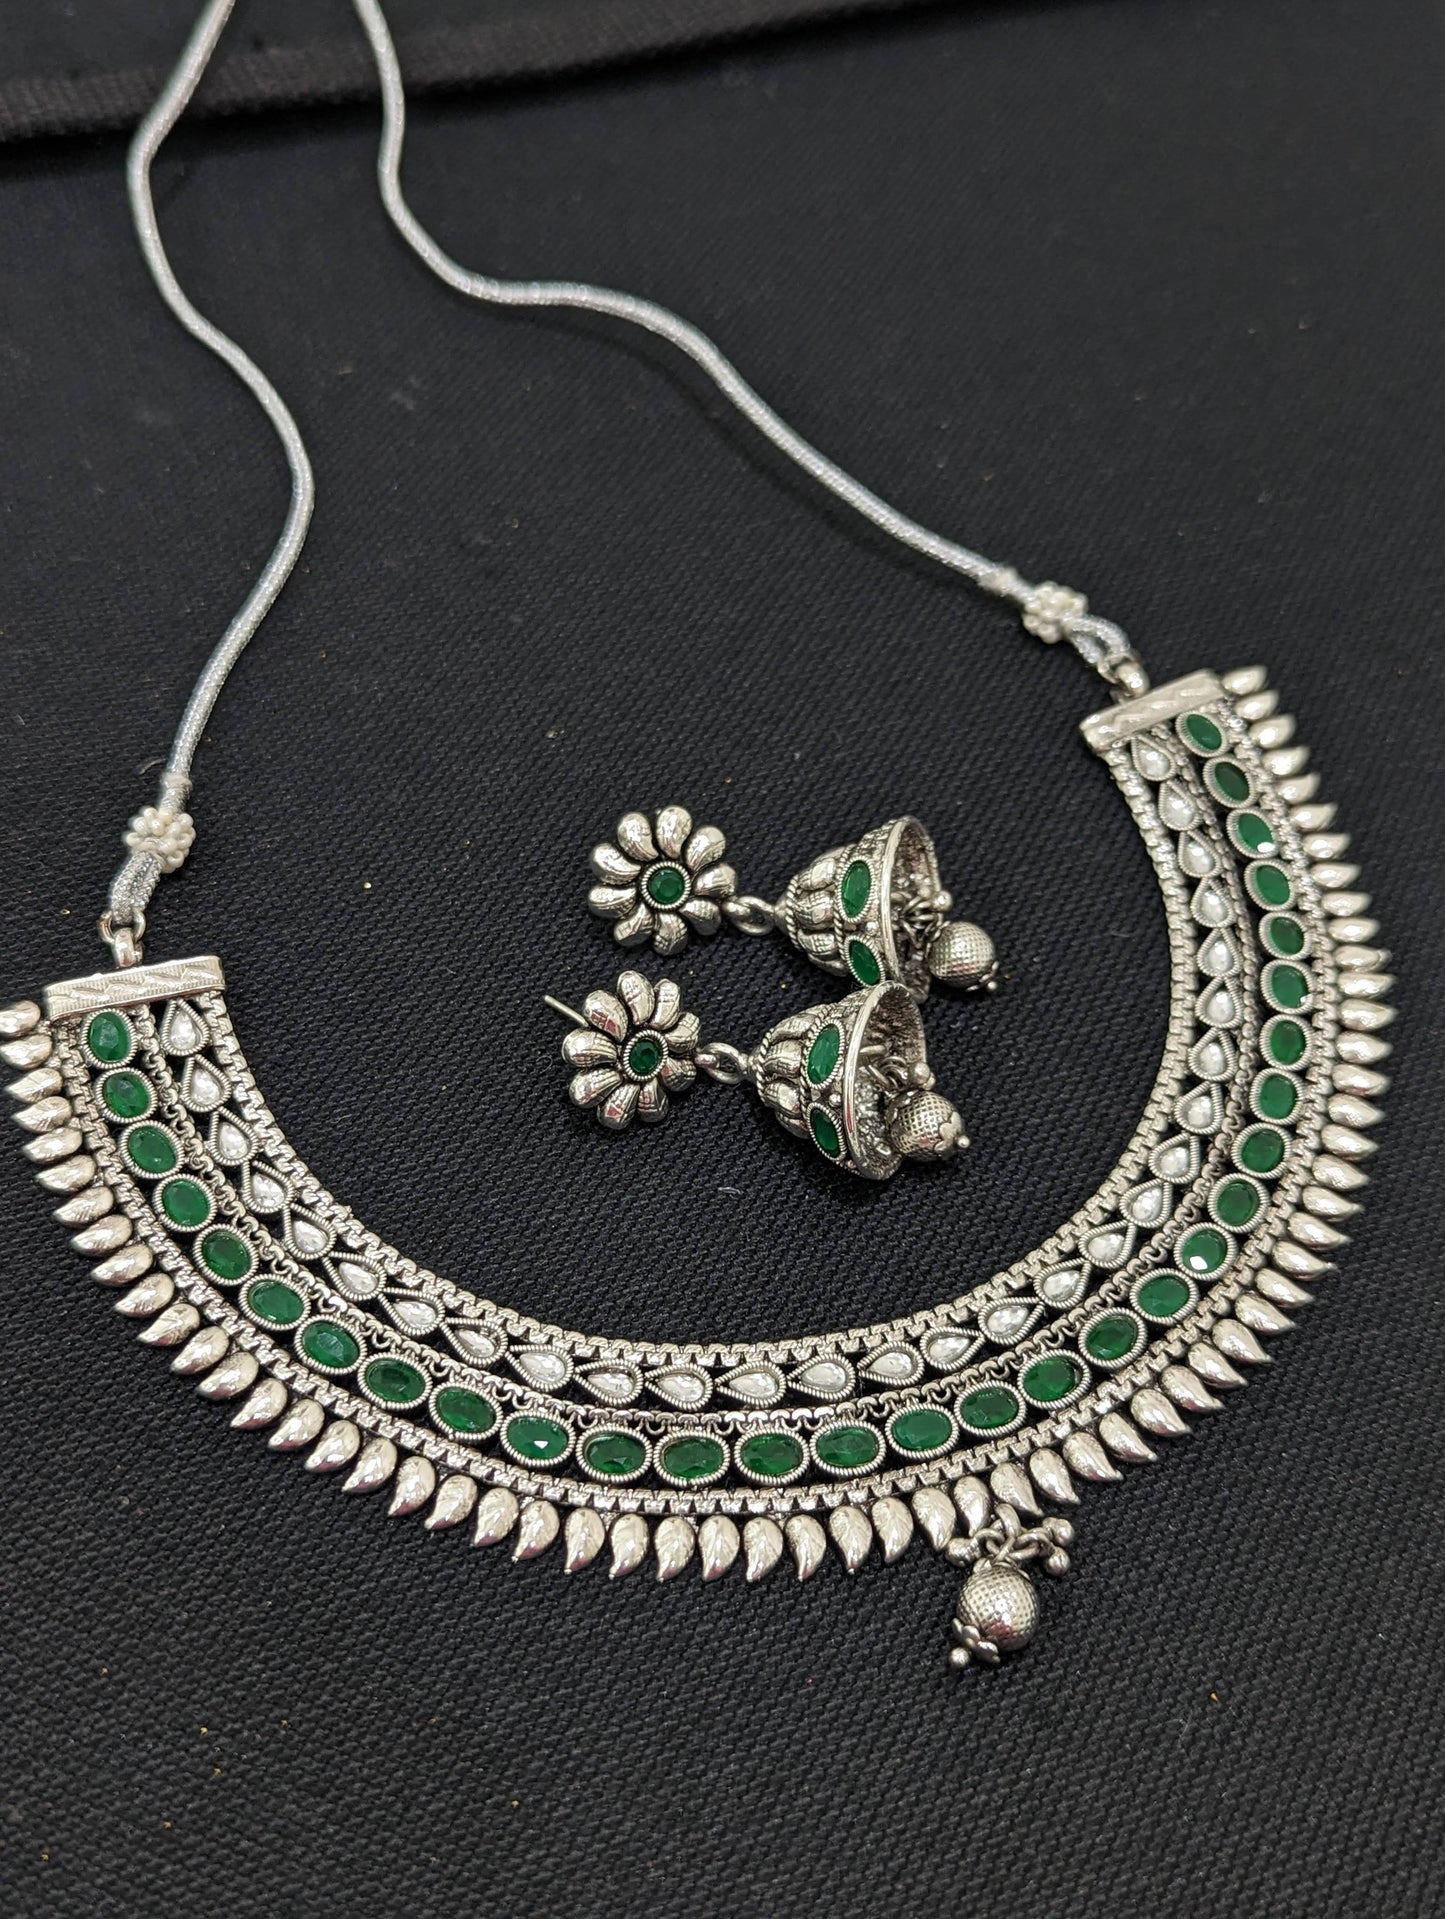 Oxidized silver Oval Polki stone choker Necklace set